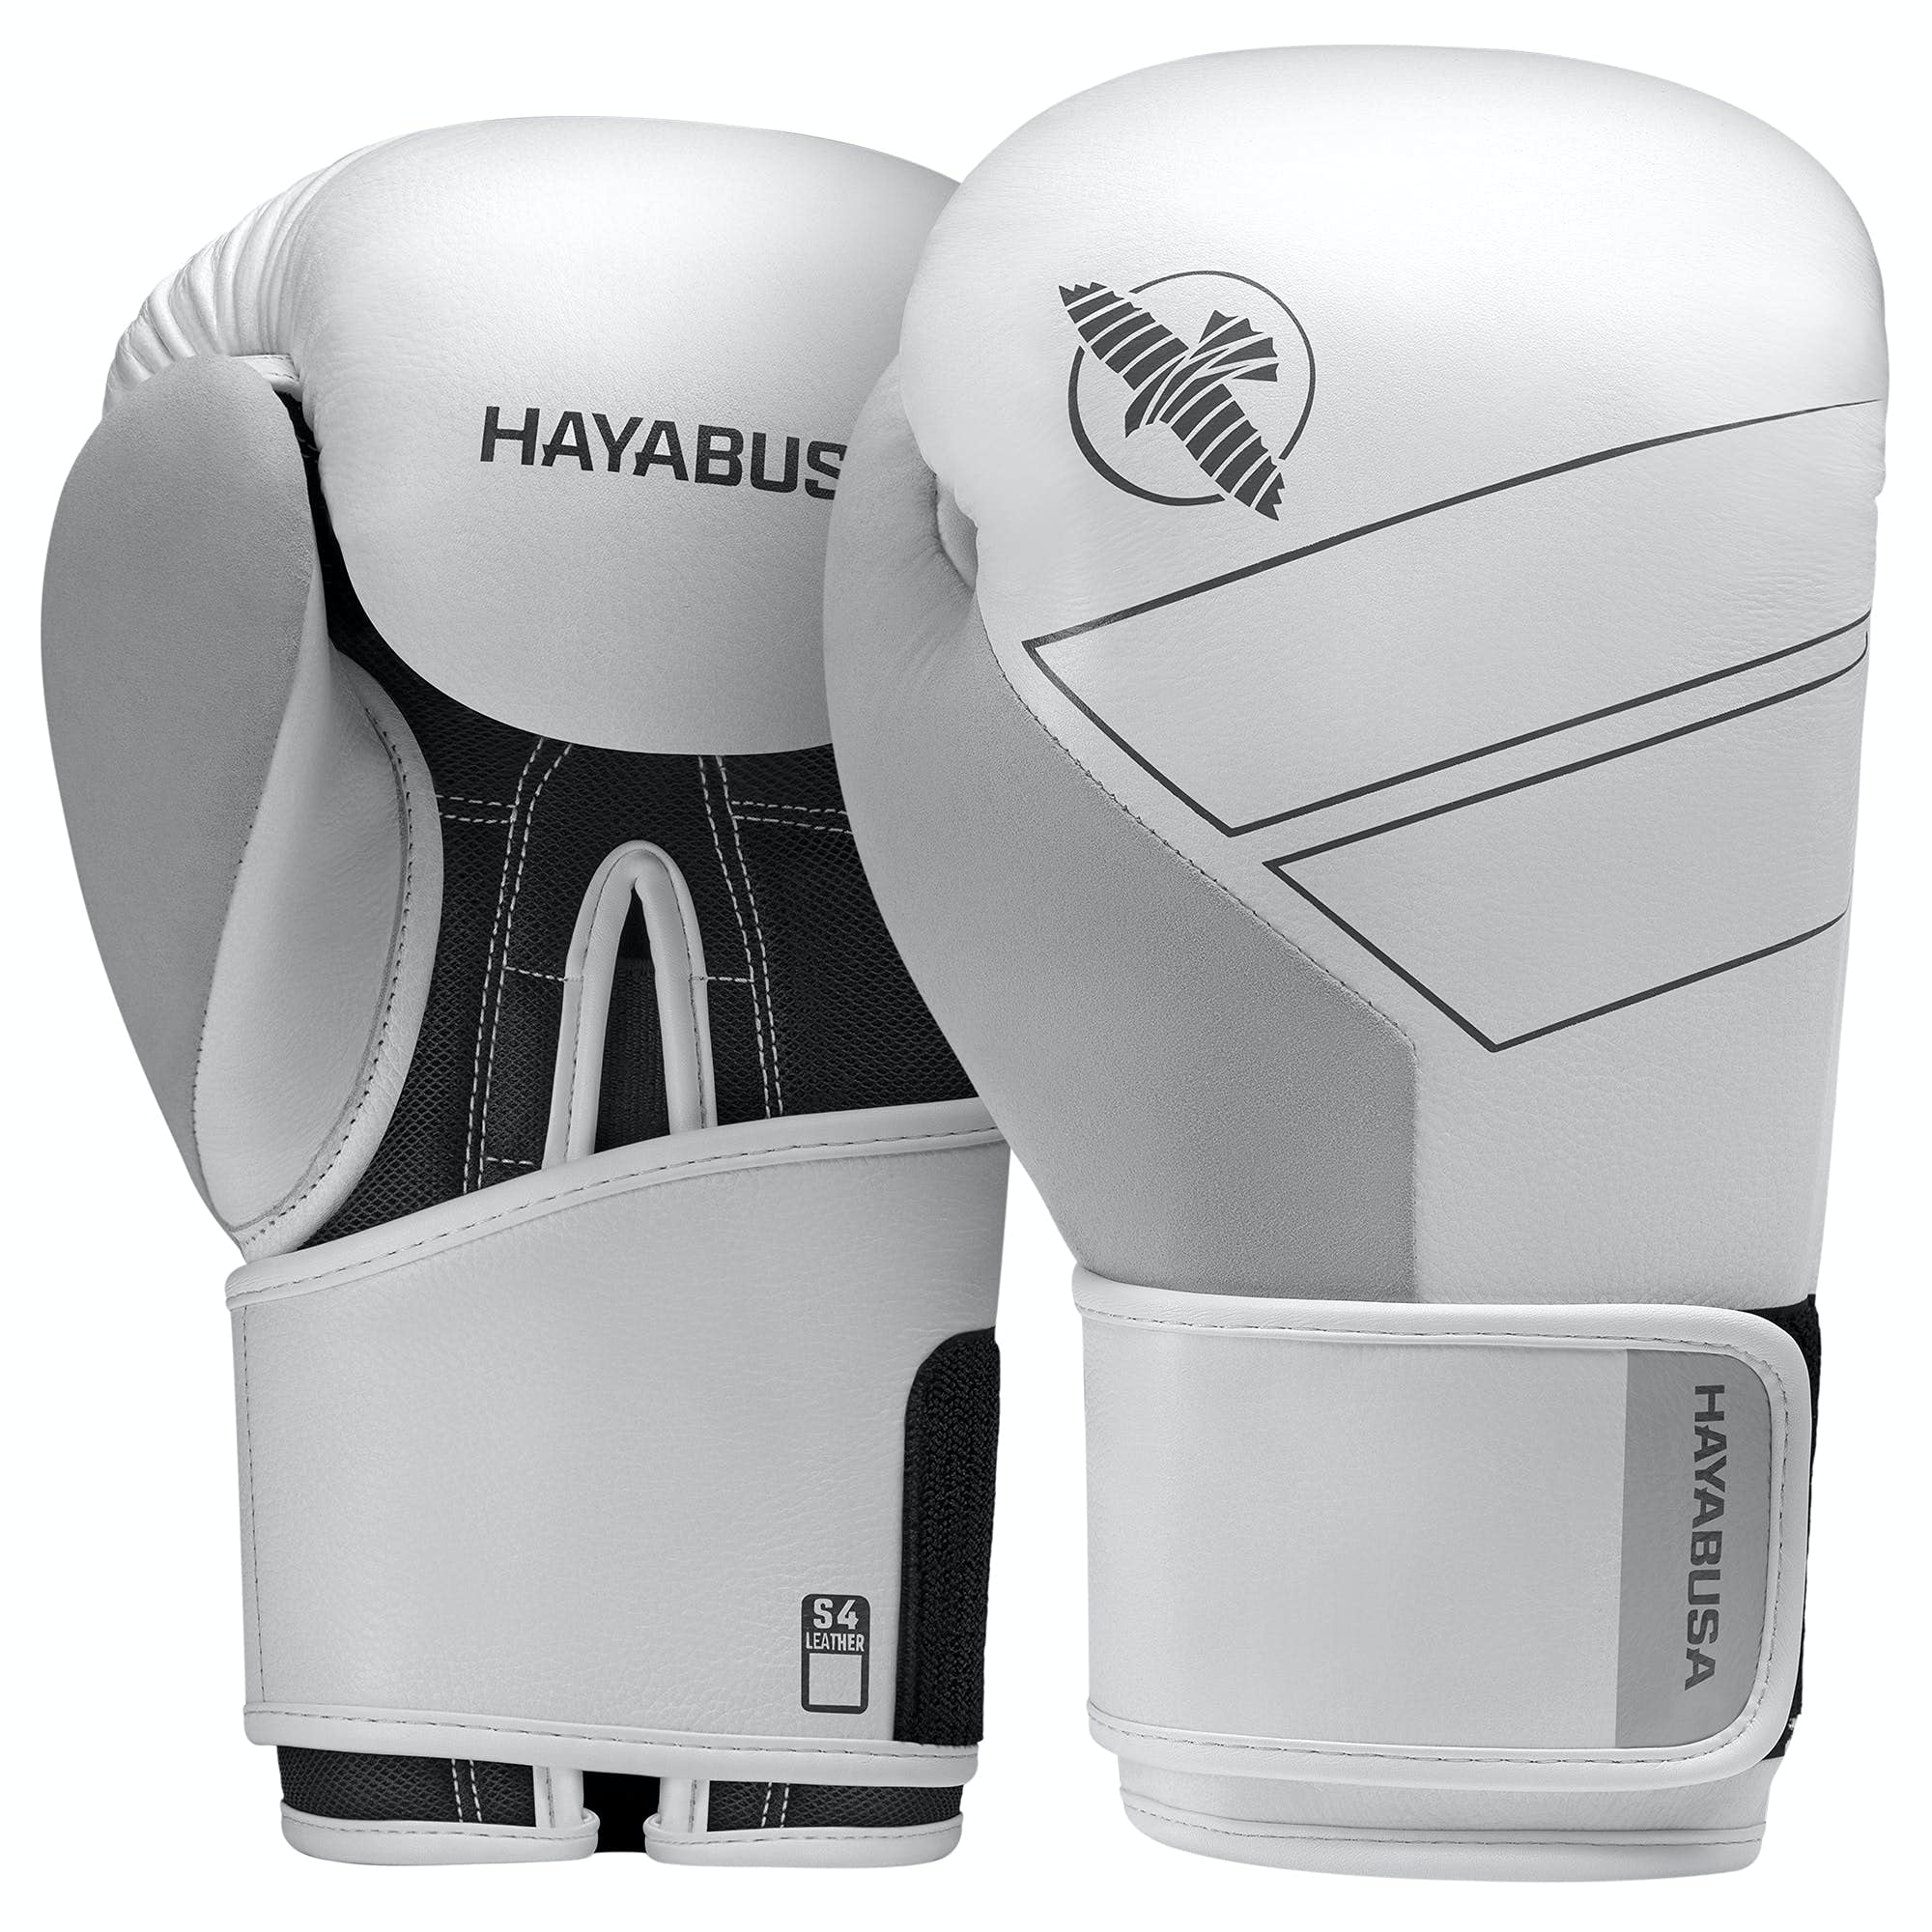 Hayabusa S4 Leather Boxing gloves for Women Men - White, 12oz